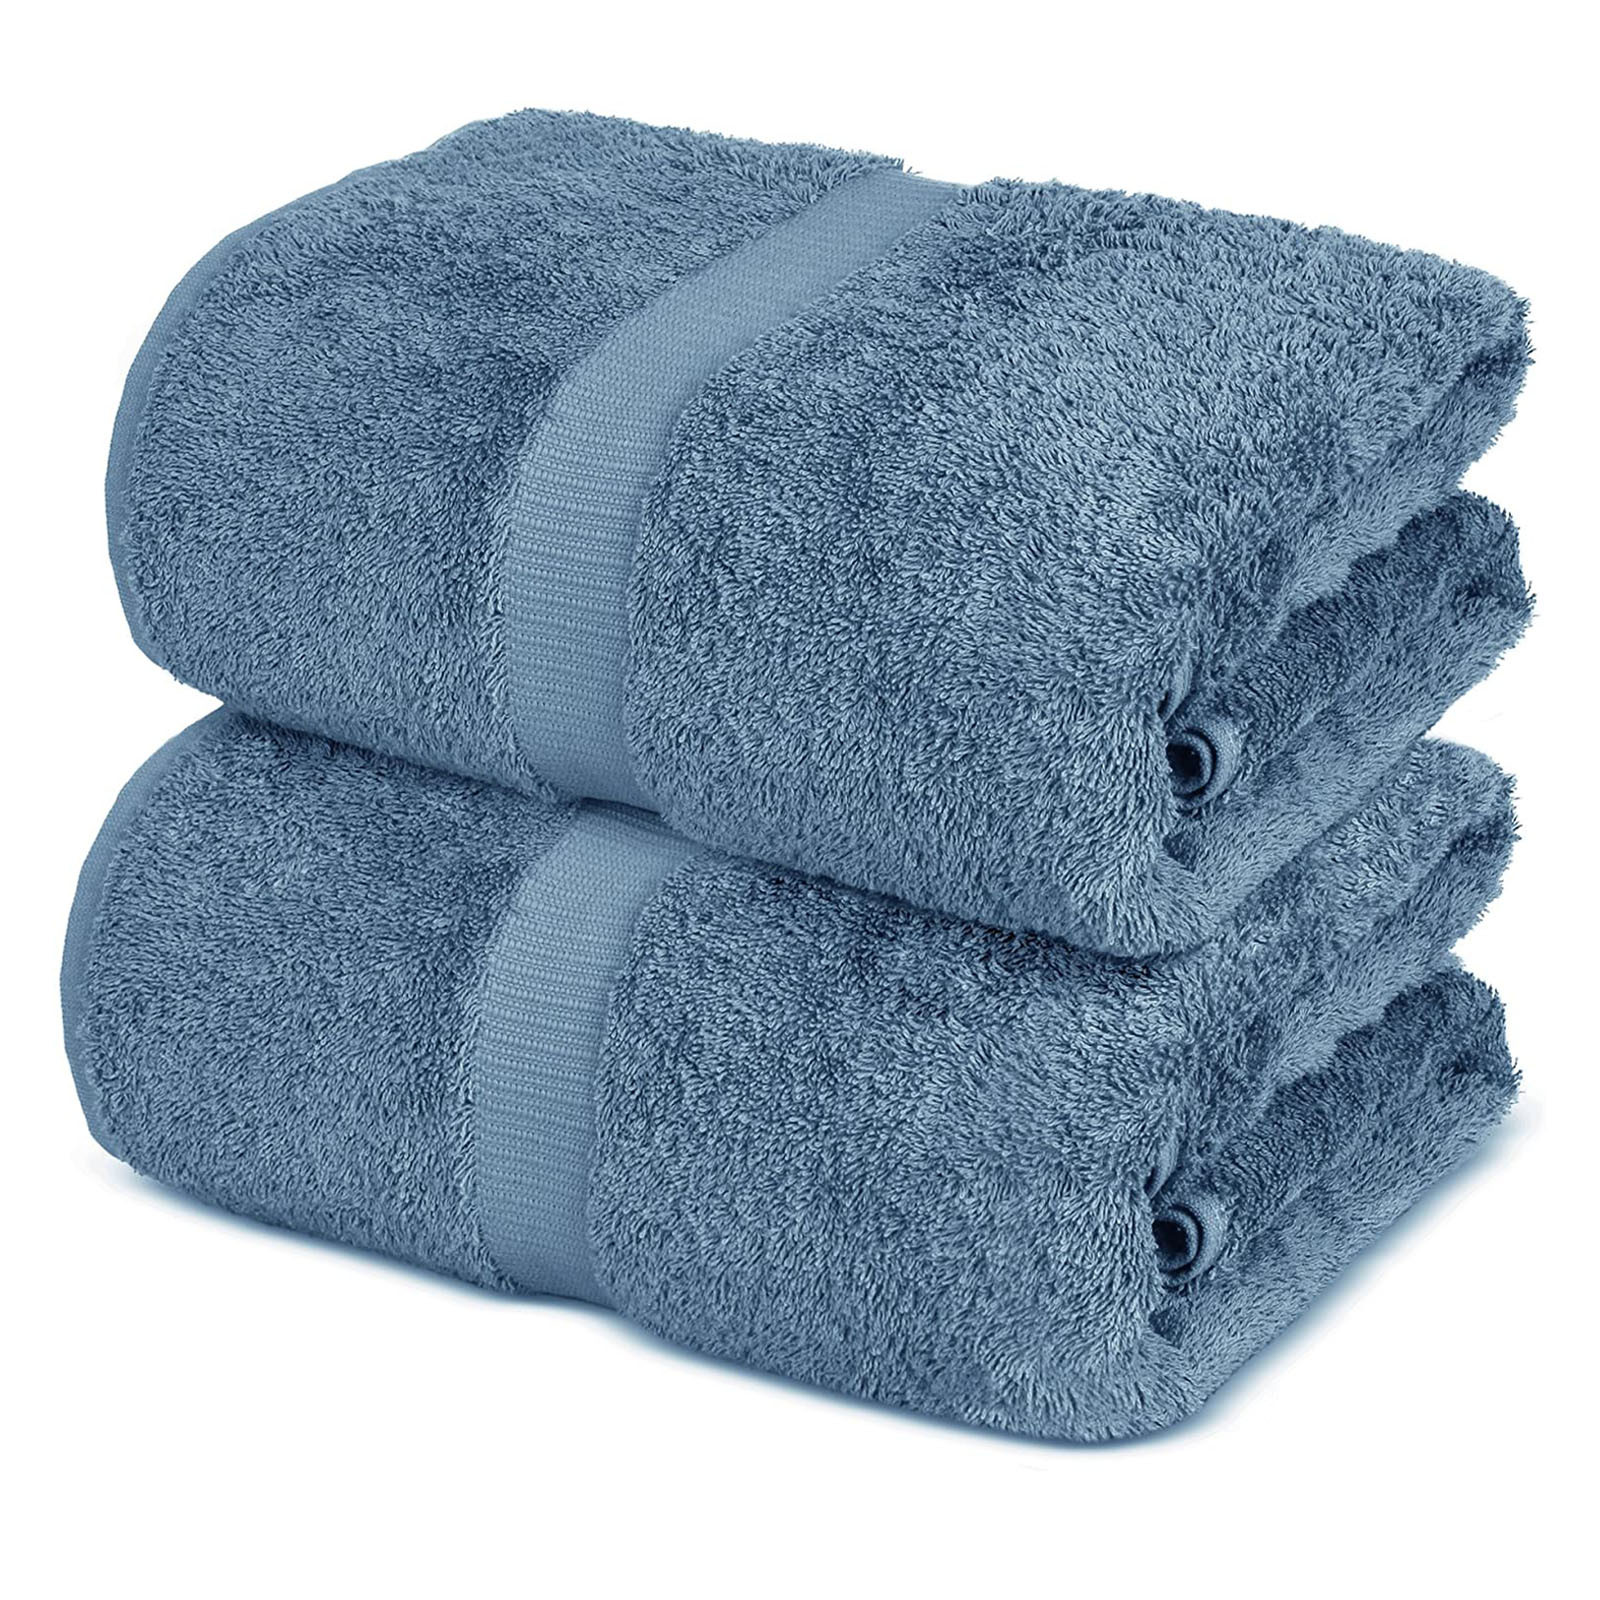 2PCS Towel 100% Turkish Cotton Bath Sheets 700 GSM 35 x 70 Inch Eco-Friendly Super Soft Bathroom Accessories Fast Ship L*5